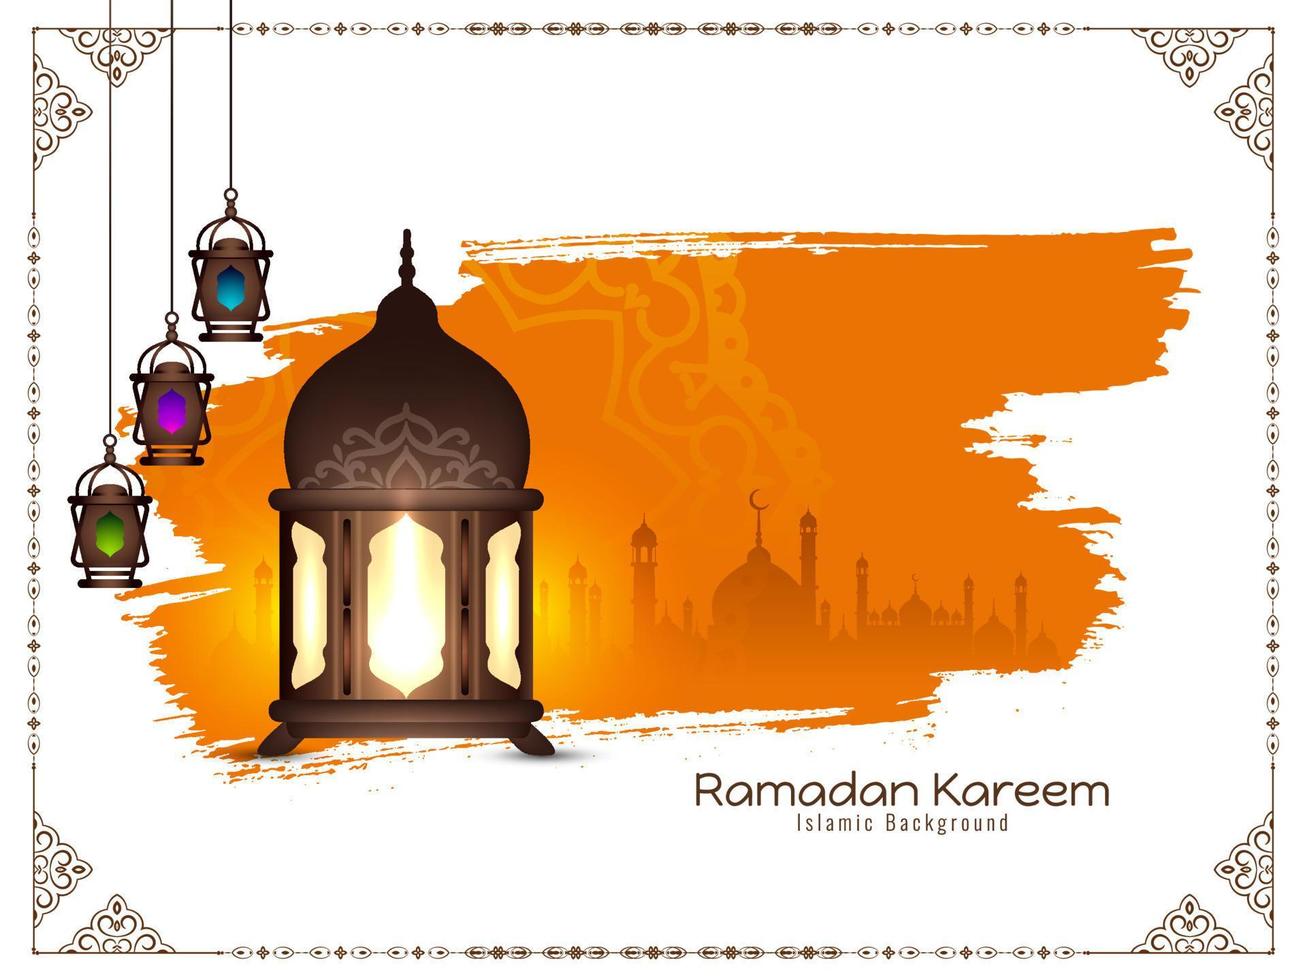 Ramadan kareem islamique arabe Festival salutation Contexte vecteur